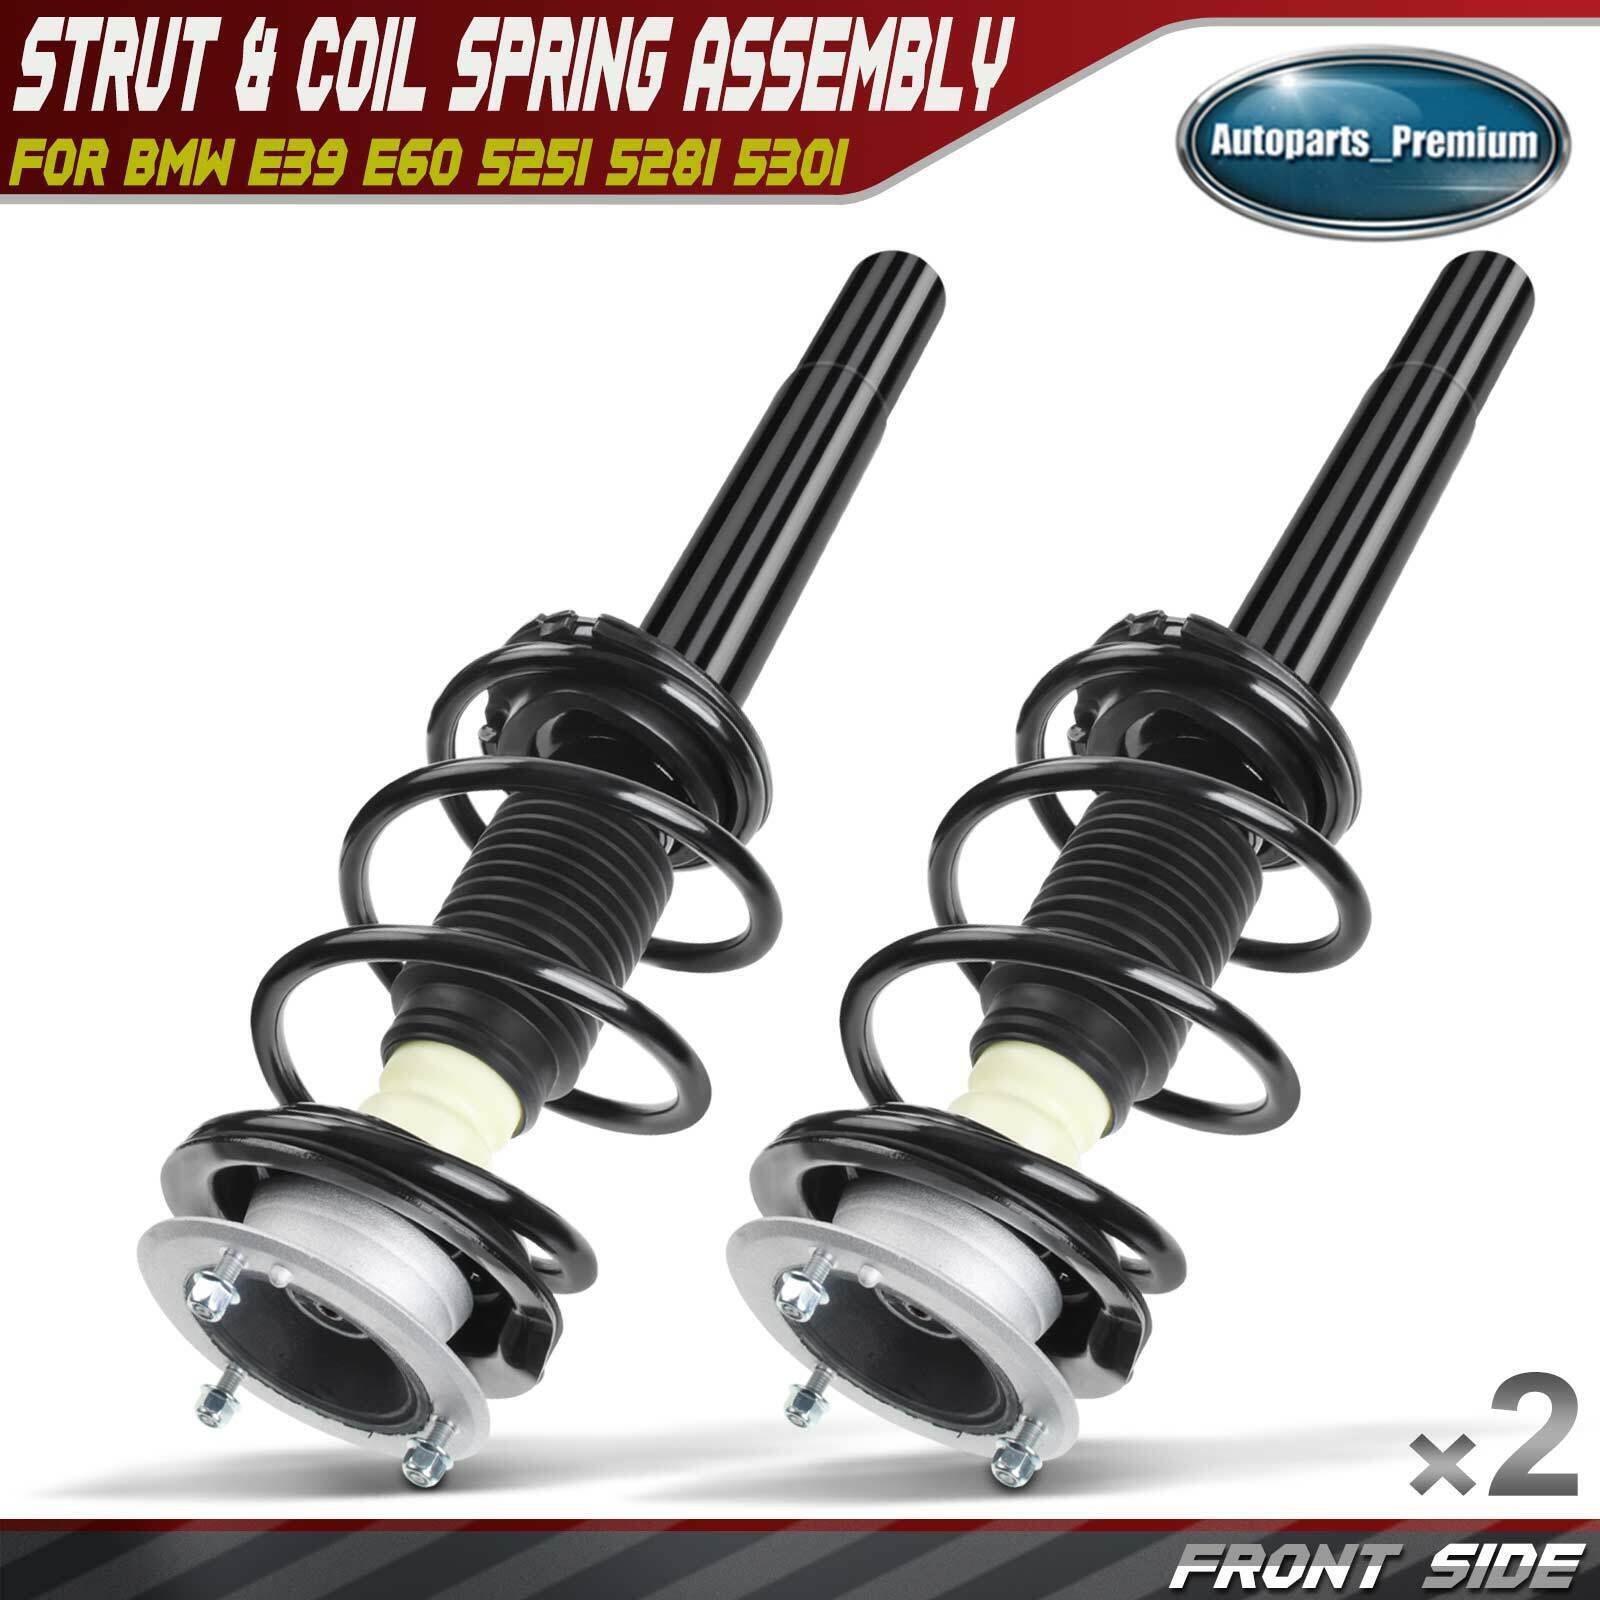 2x Complete Strut & Coil Spring Assembly for BMW E39 E60 525i 528i 530i Front